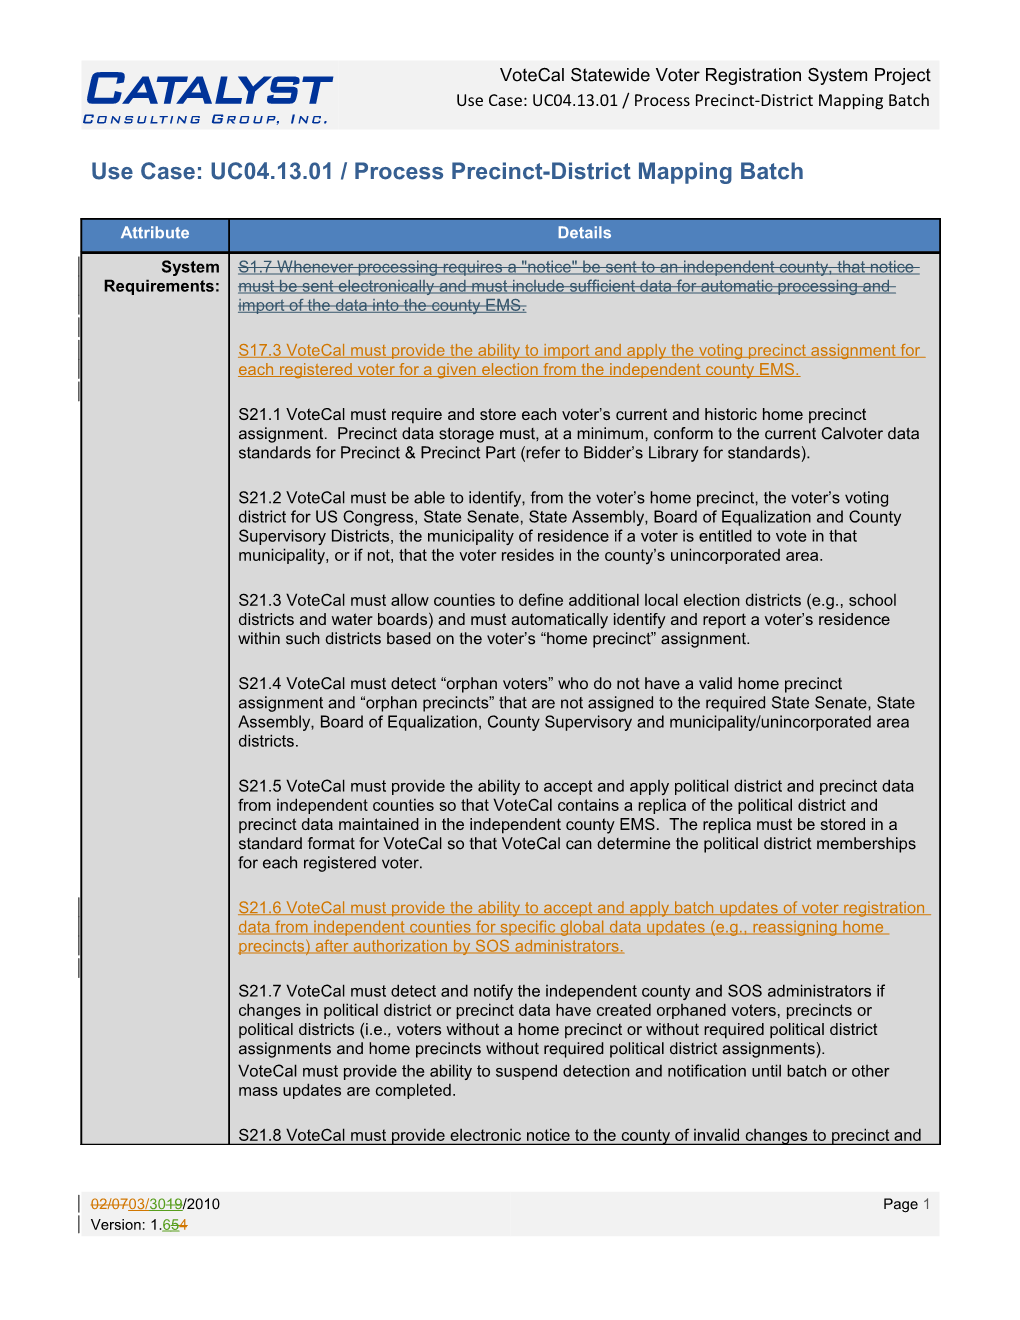 Use Case: UC04.13.01 / Process Precinct-District Mapping Batch